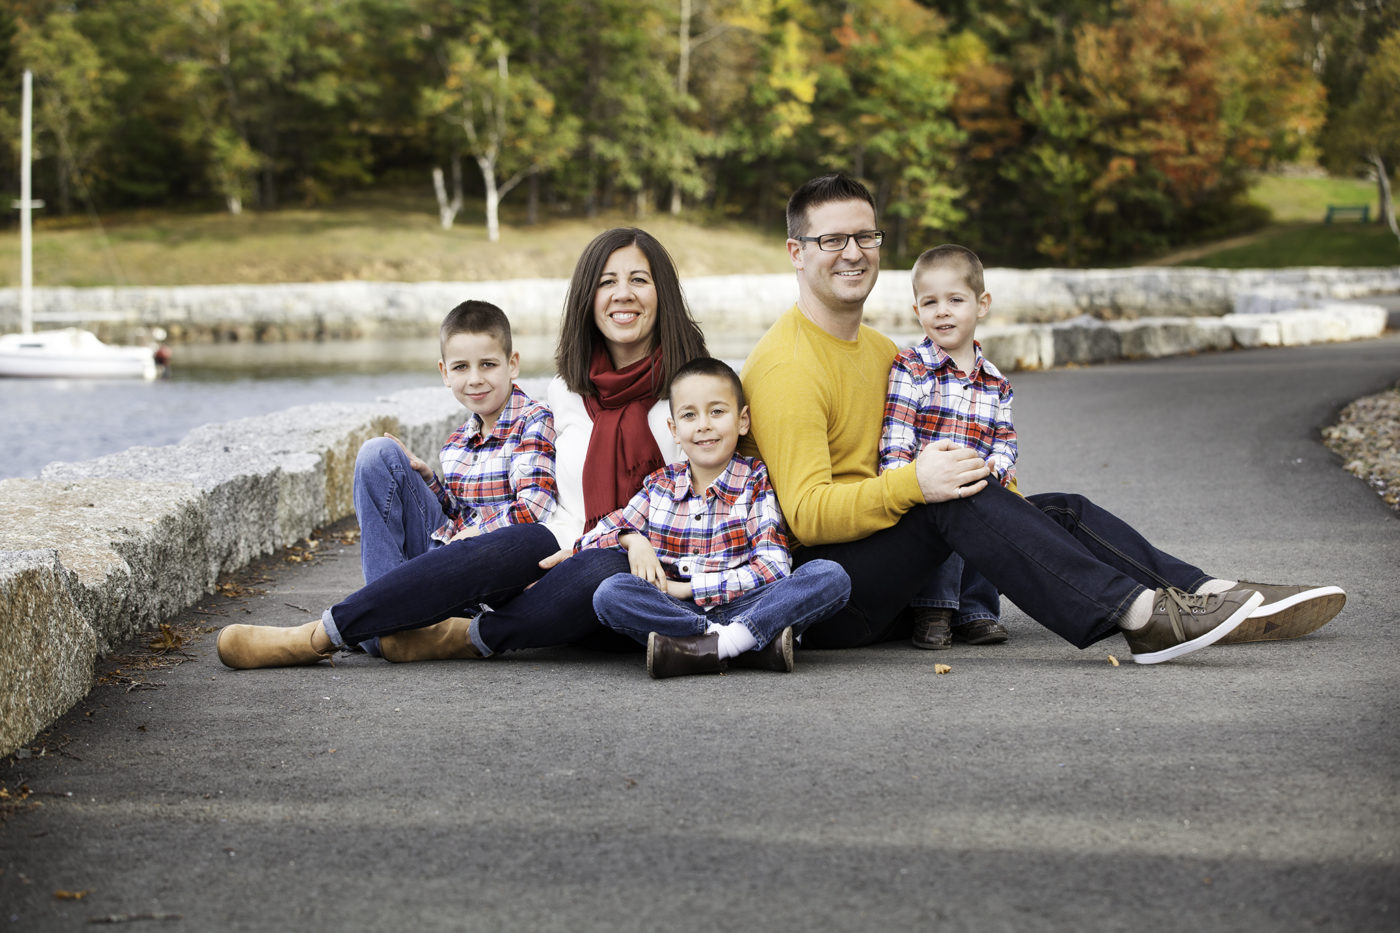 Family photo taken by photographer Amanda Speers in Halifax, Nova Scotia